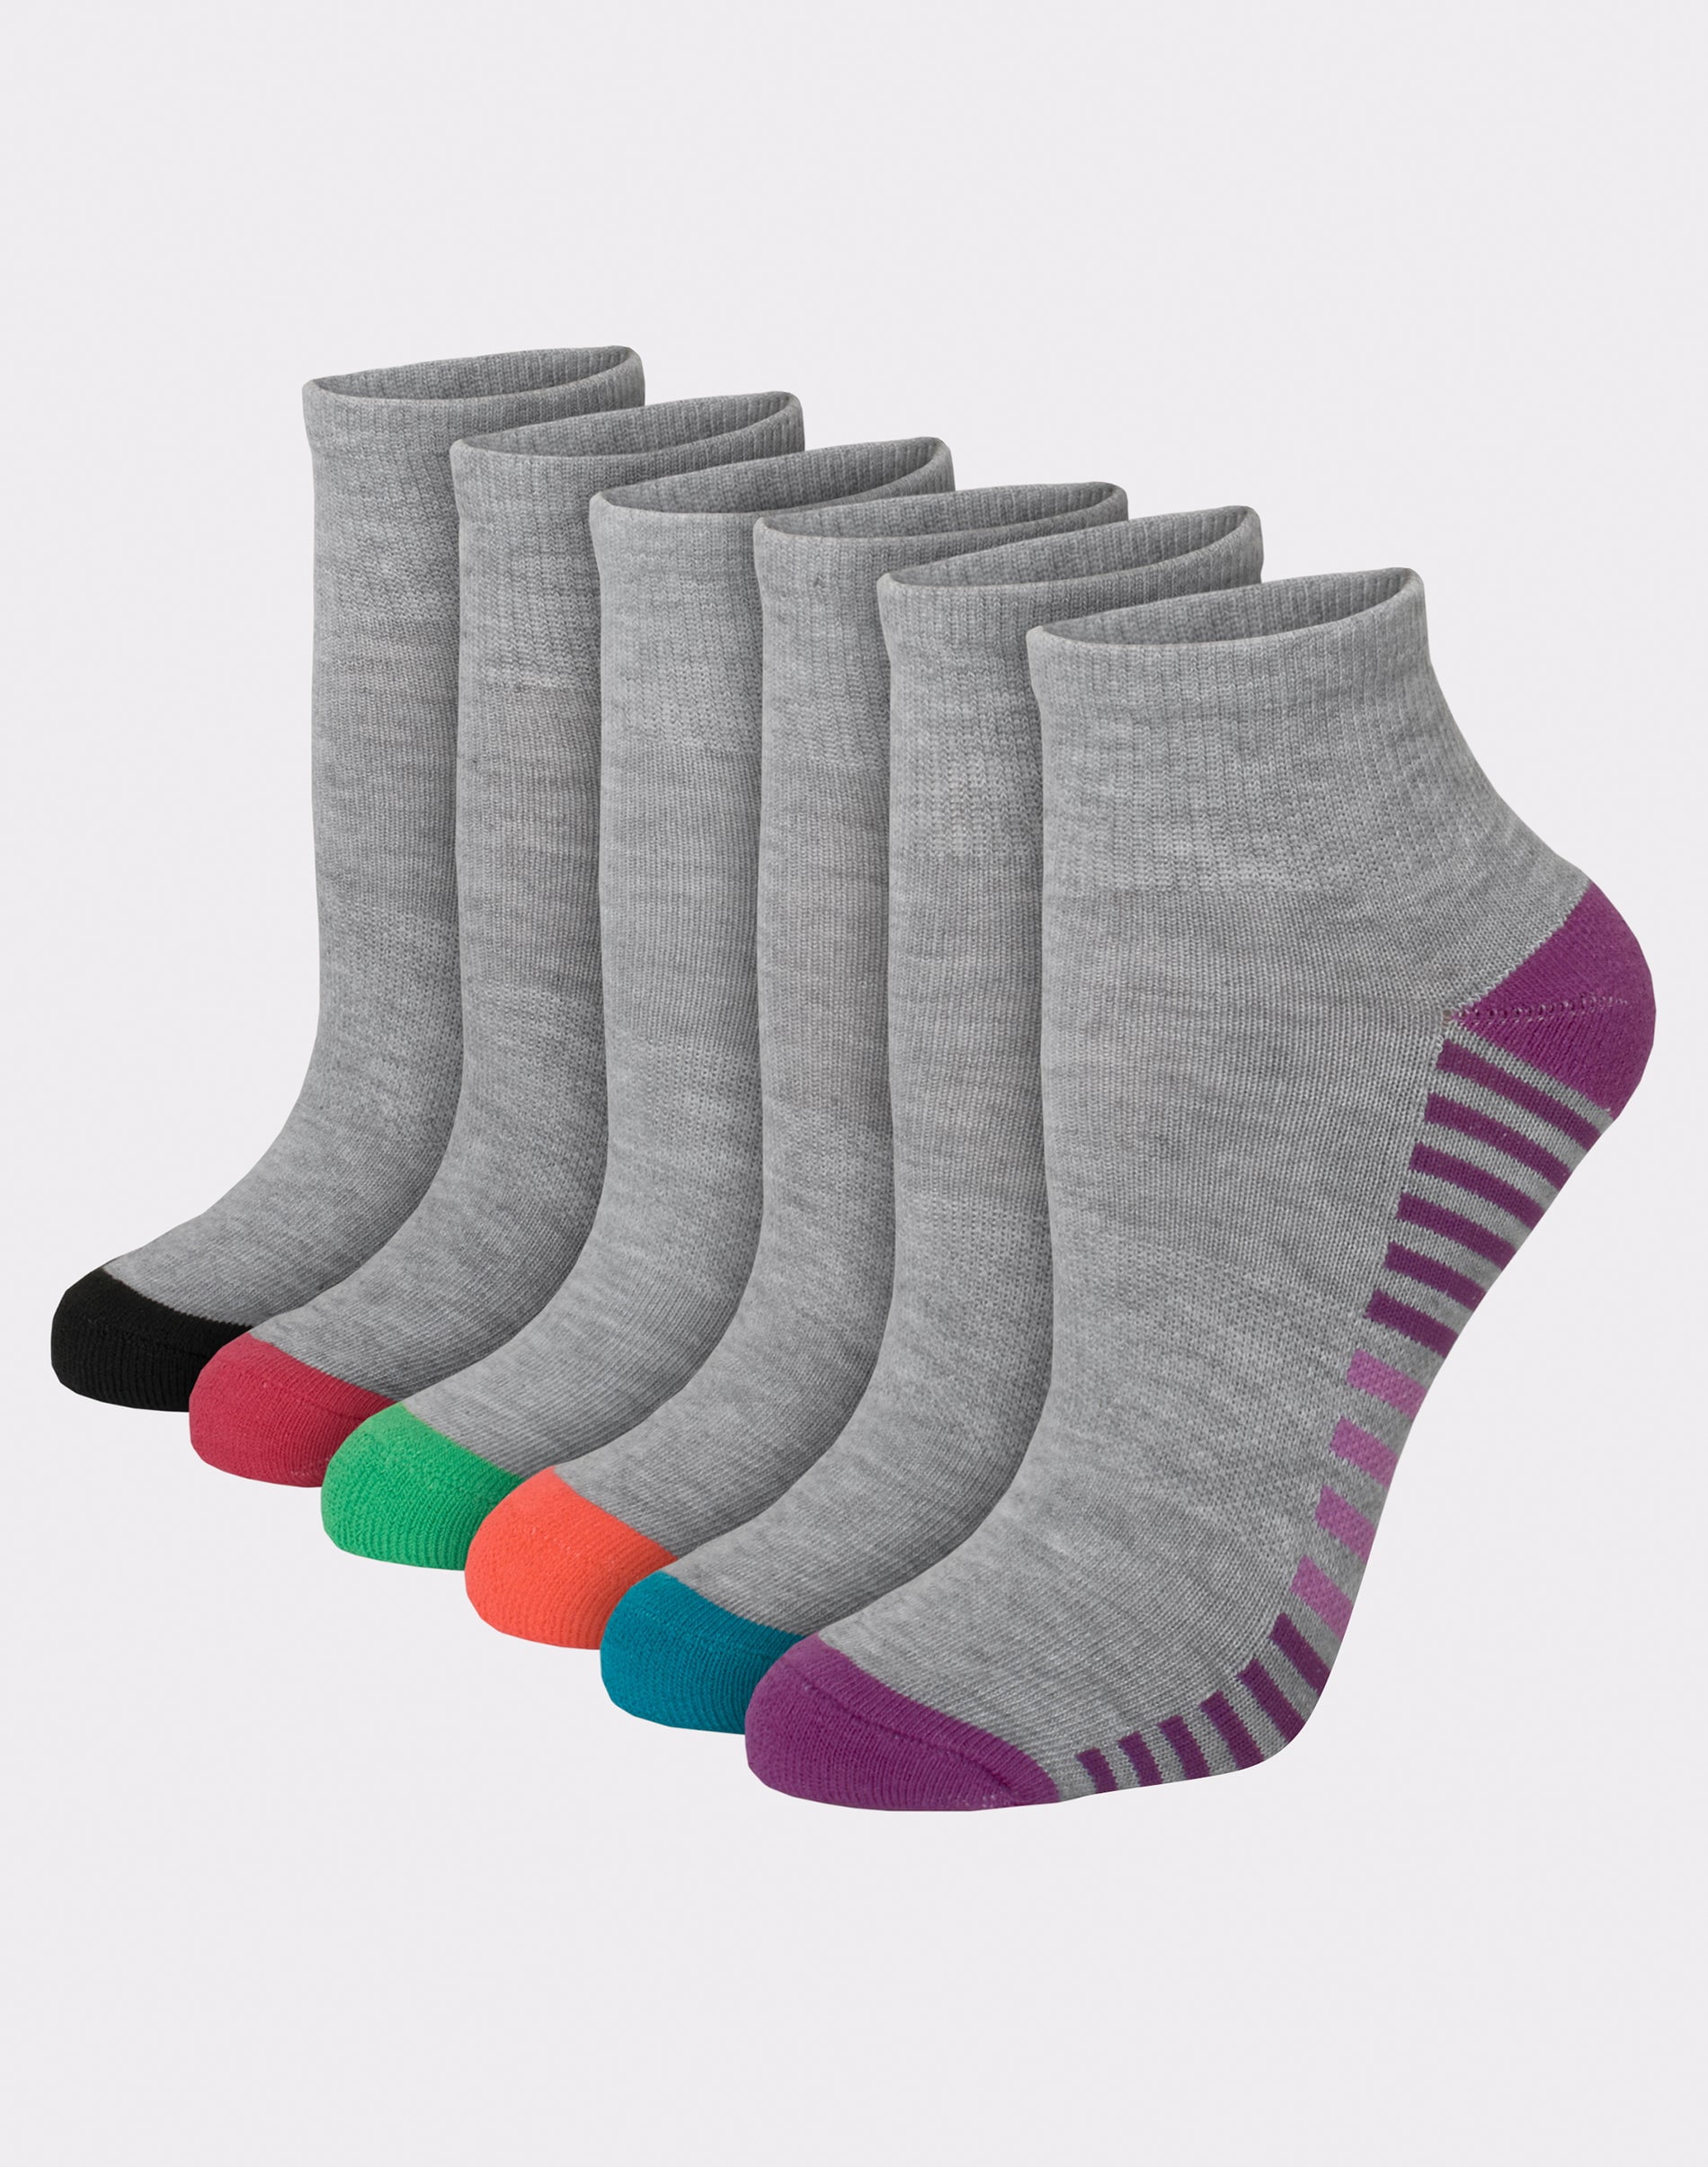 Hanes Comfort Fit Women's Ankle Socks, 6-Pairs Assortment 1 5-9 